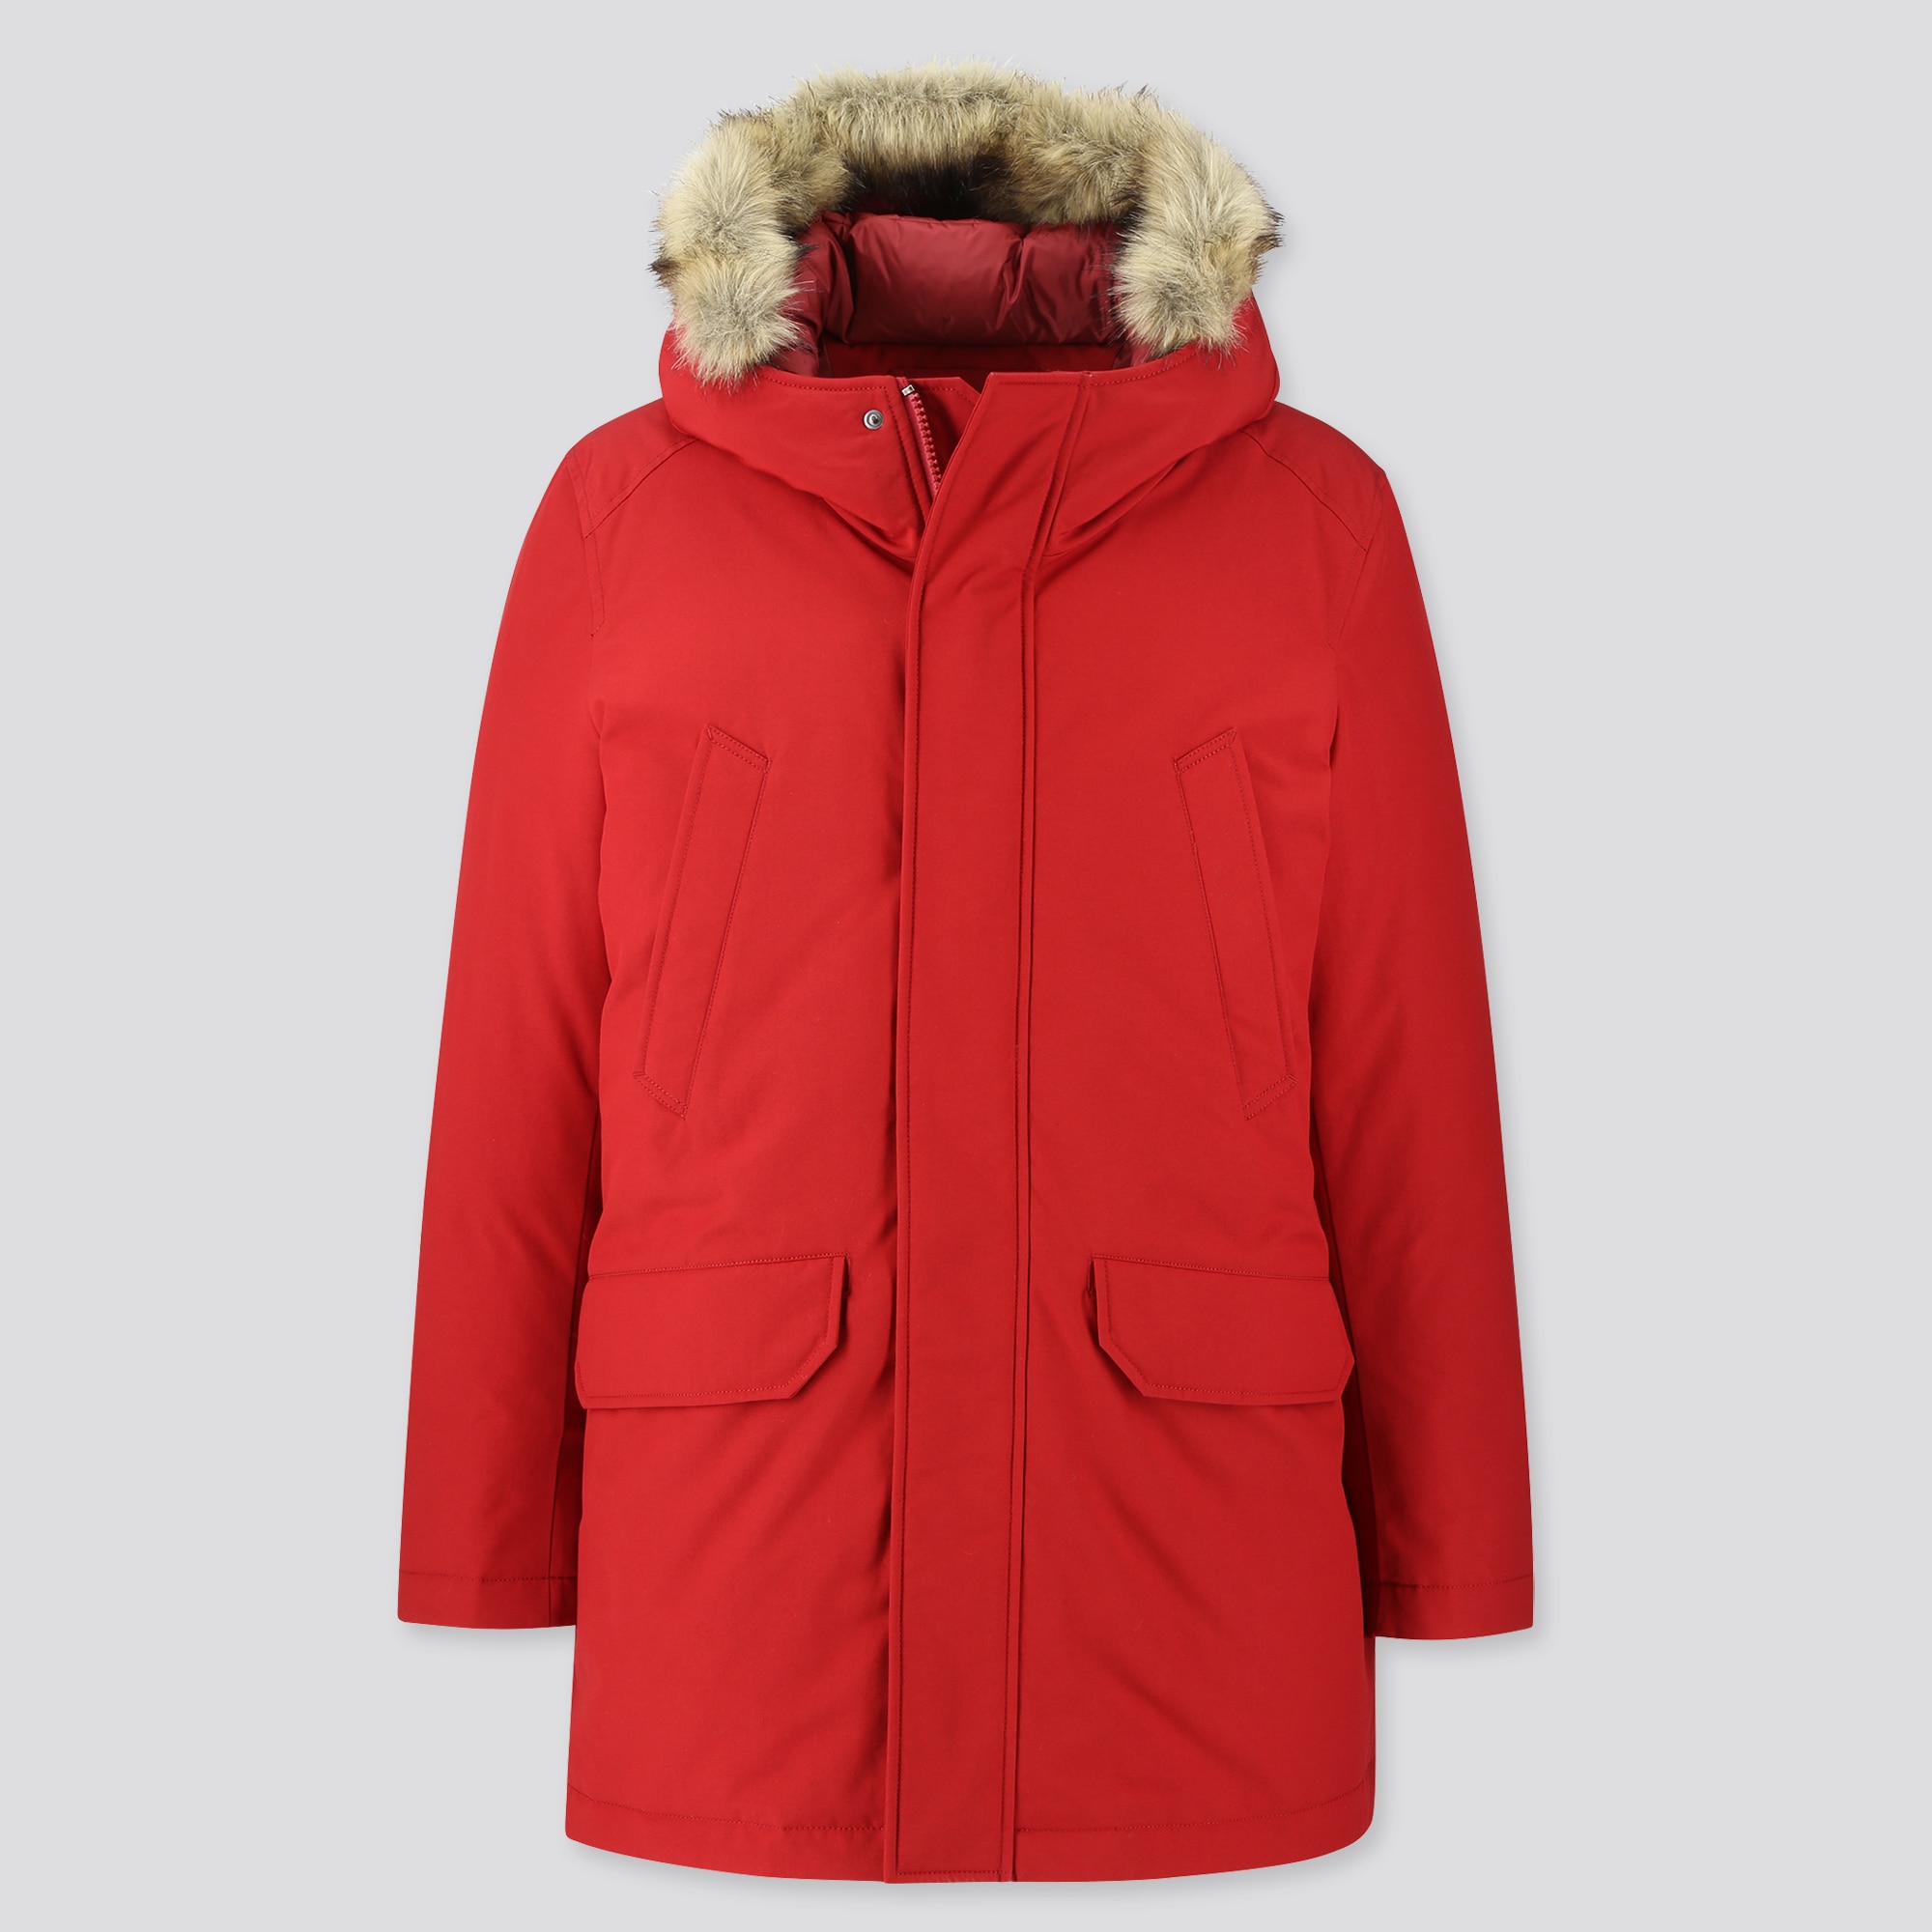 Mens Winter Parka Jacket Hooded Padded Longer Back 90% Cotton Zip Very Warm UK